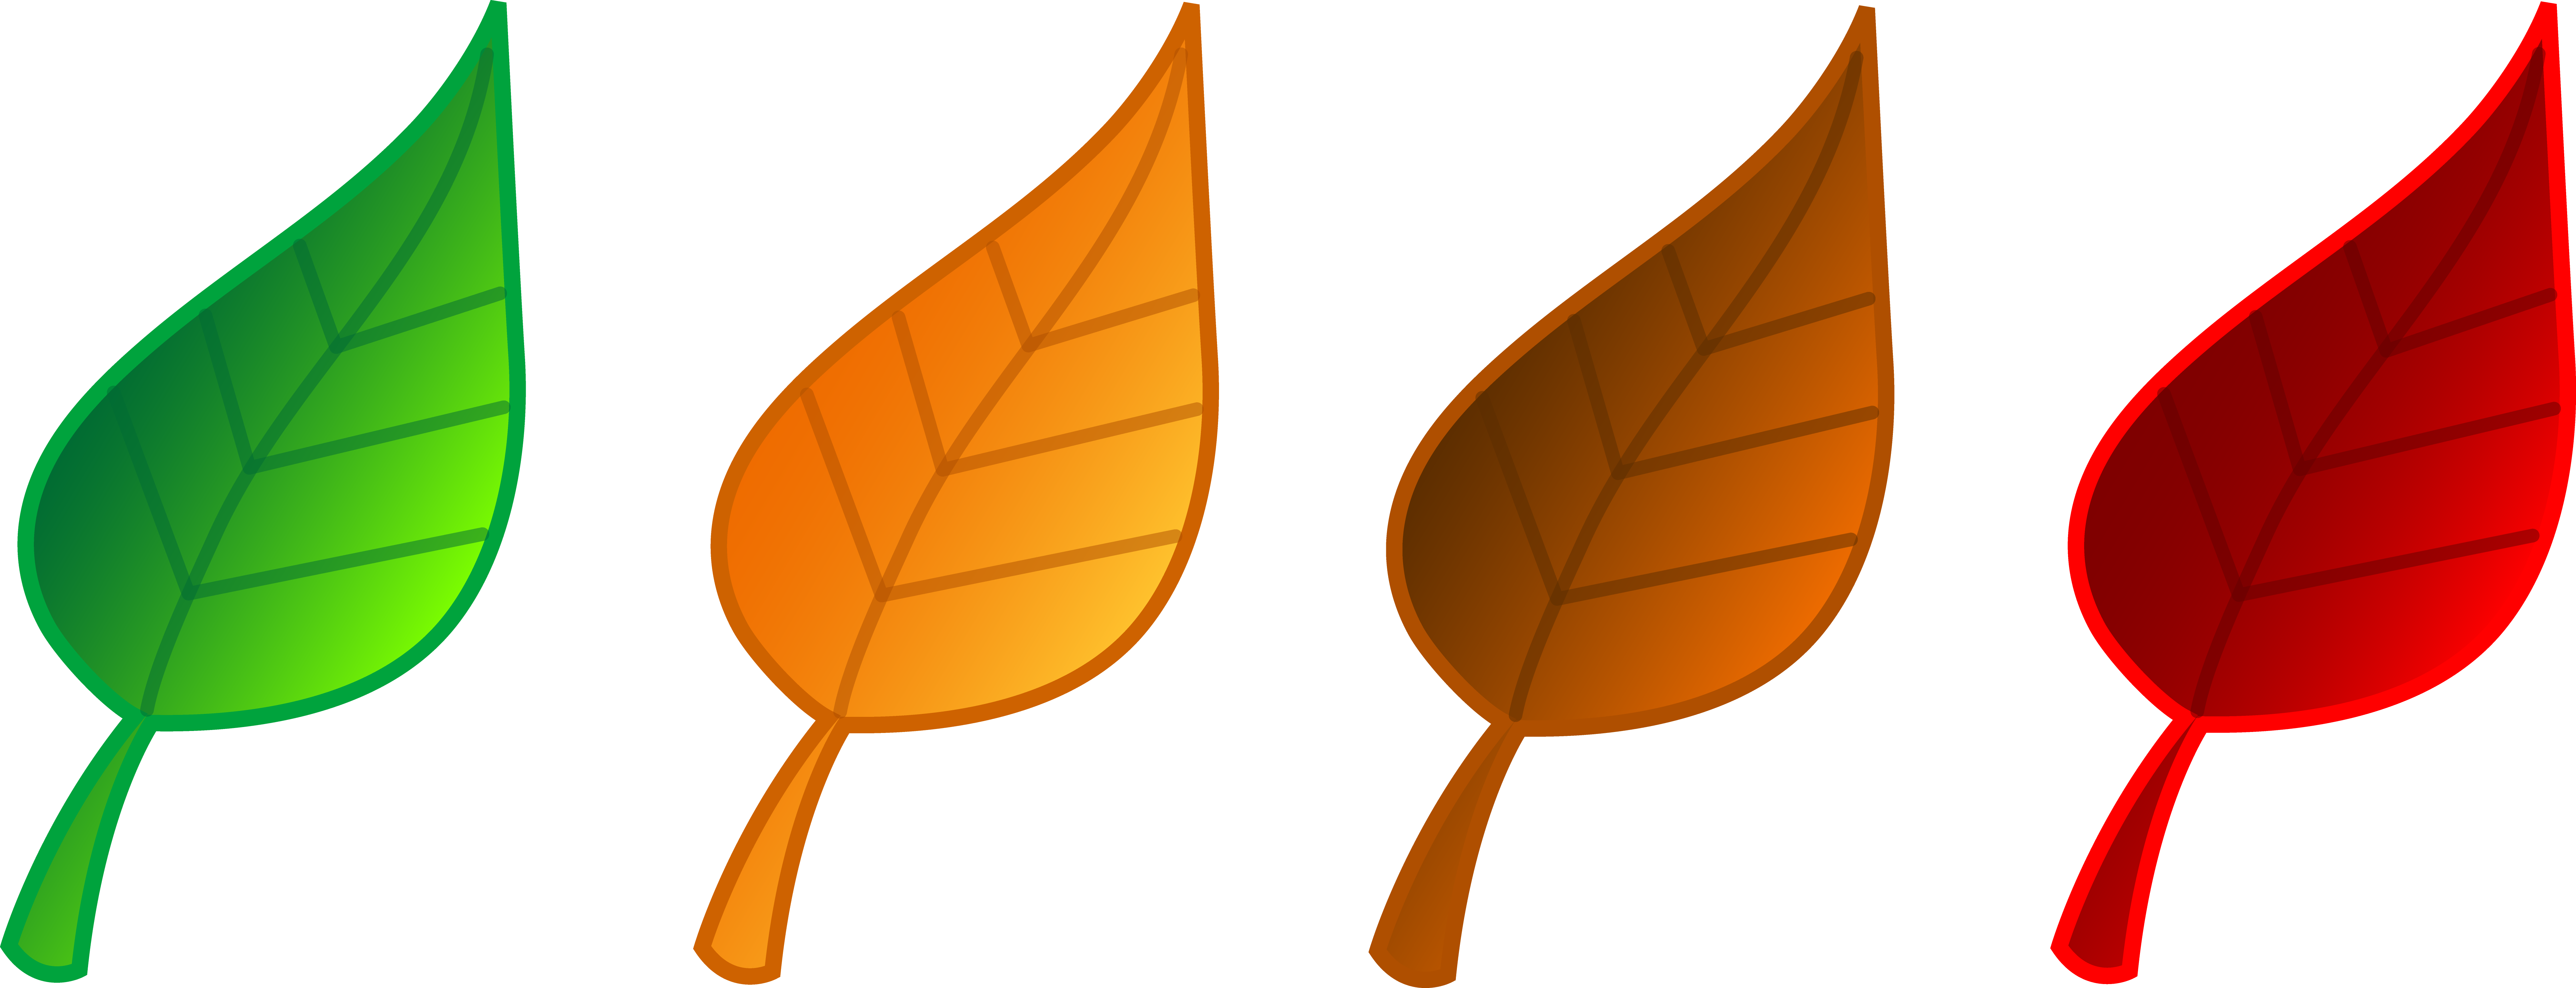 67 Free Fall Leaves Clip Art